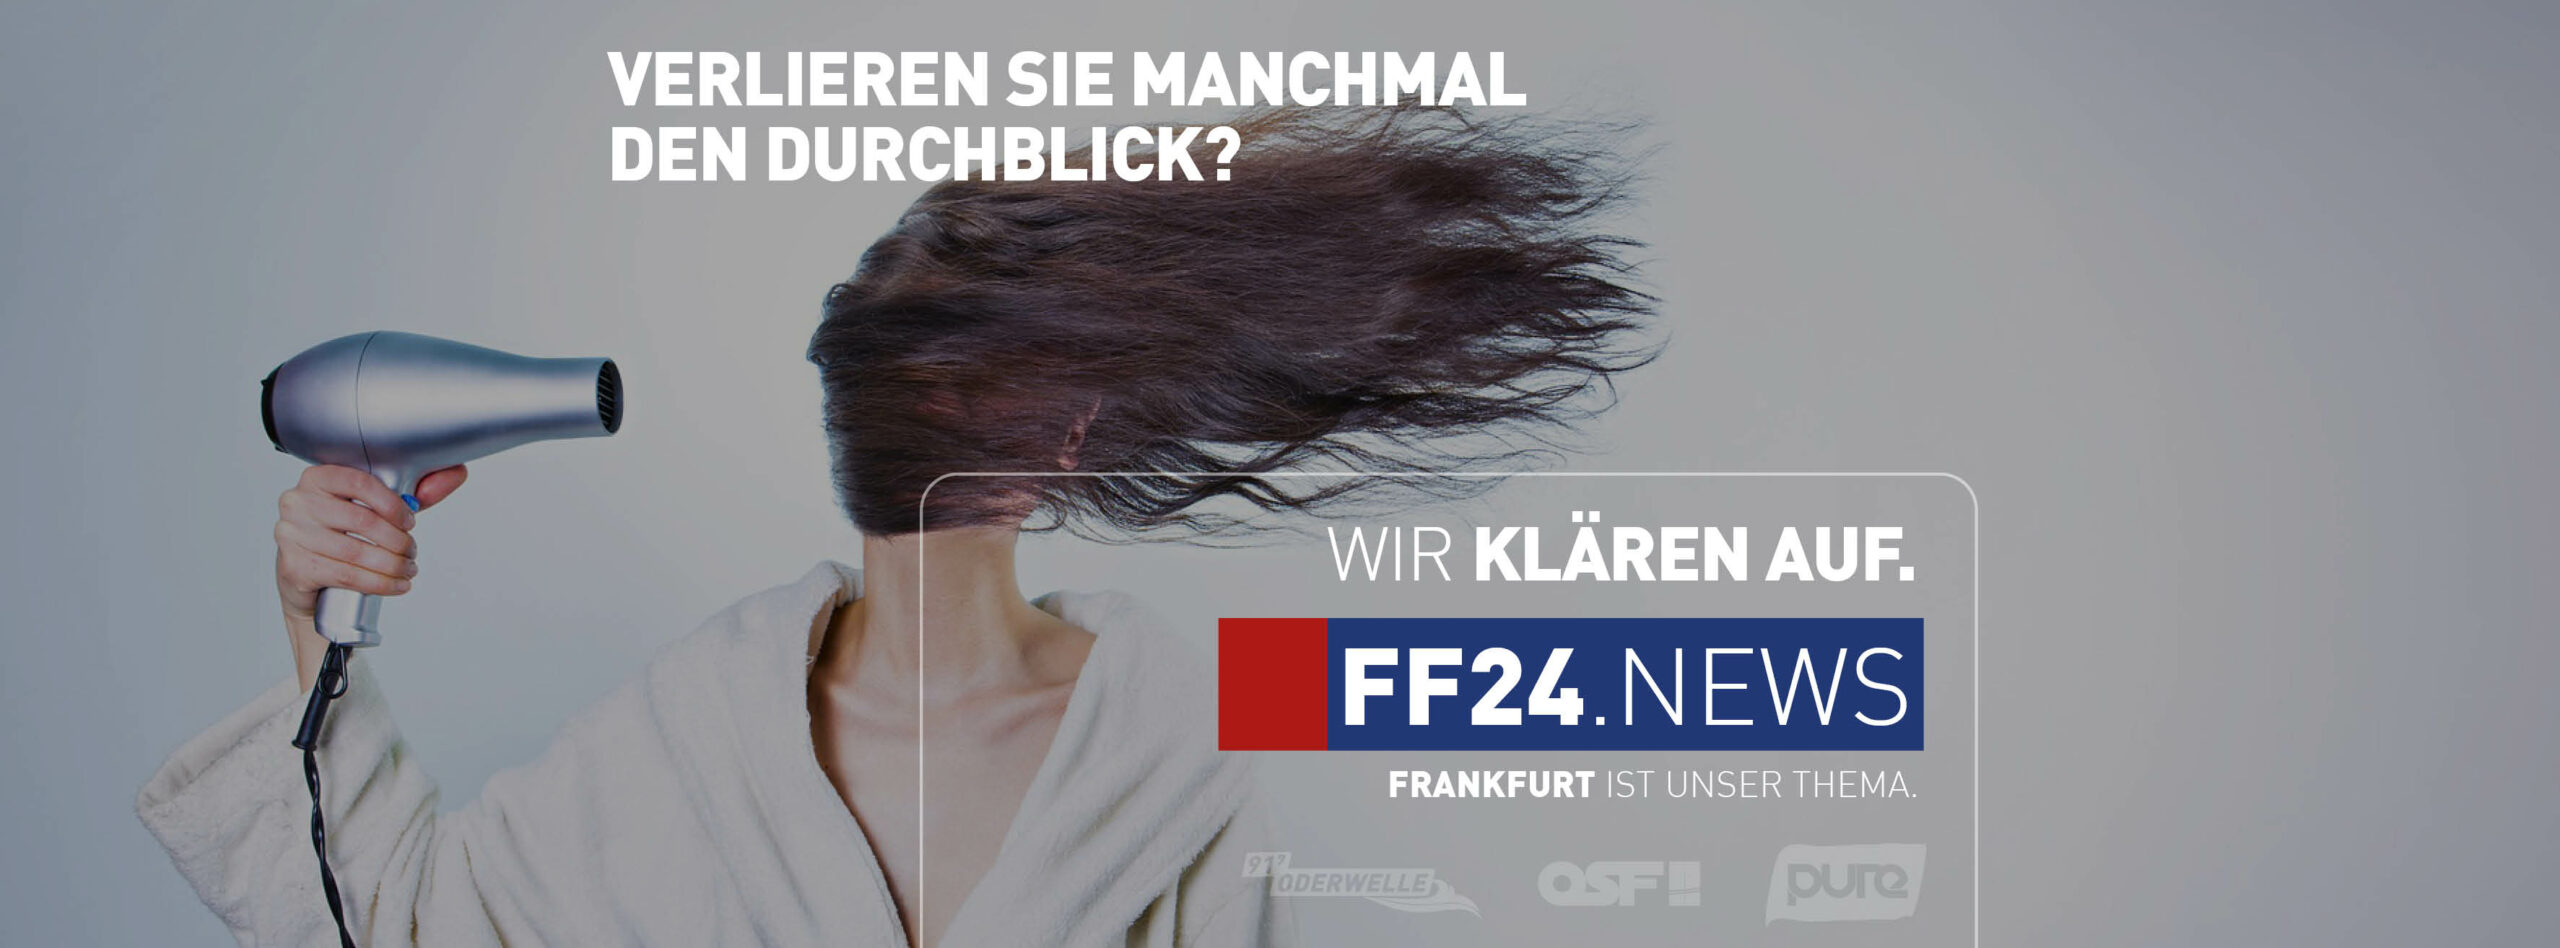 http://www.ff24.news/wp-content/uploads/21-03-27-ff24-fb-kampagne-durchblick-scaled.jpg